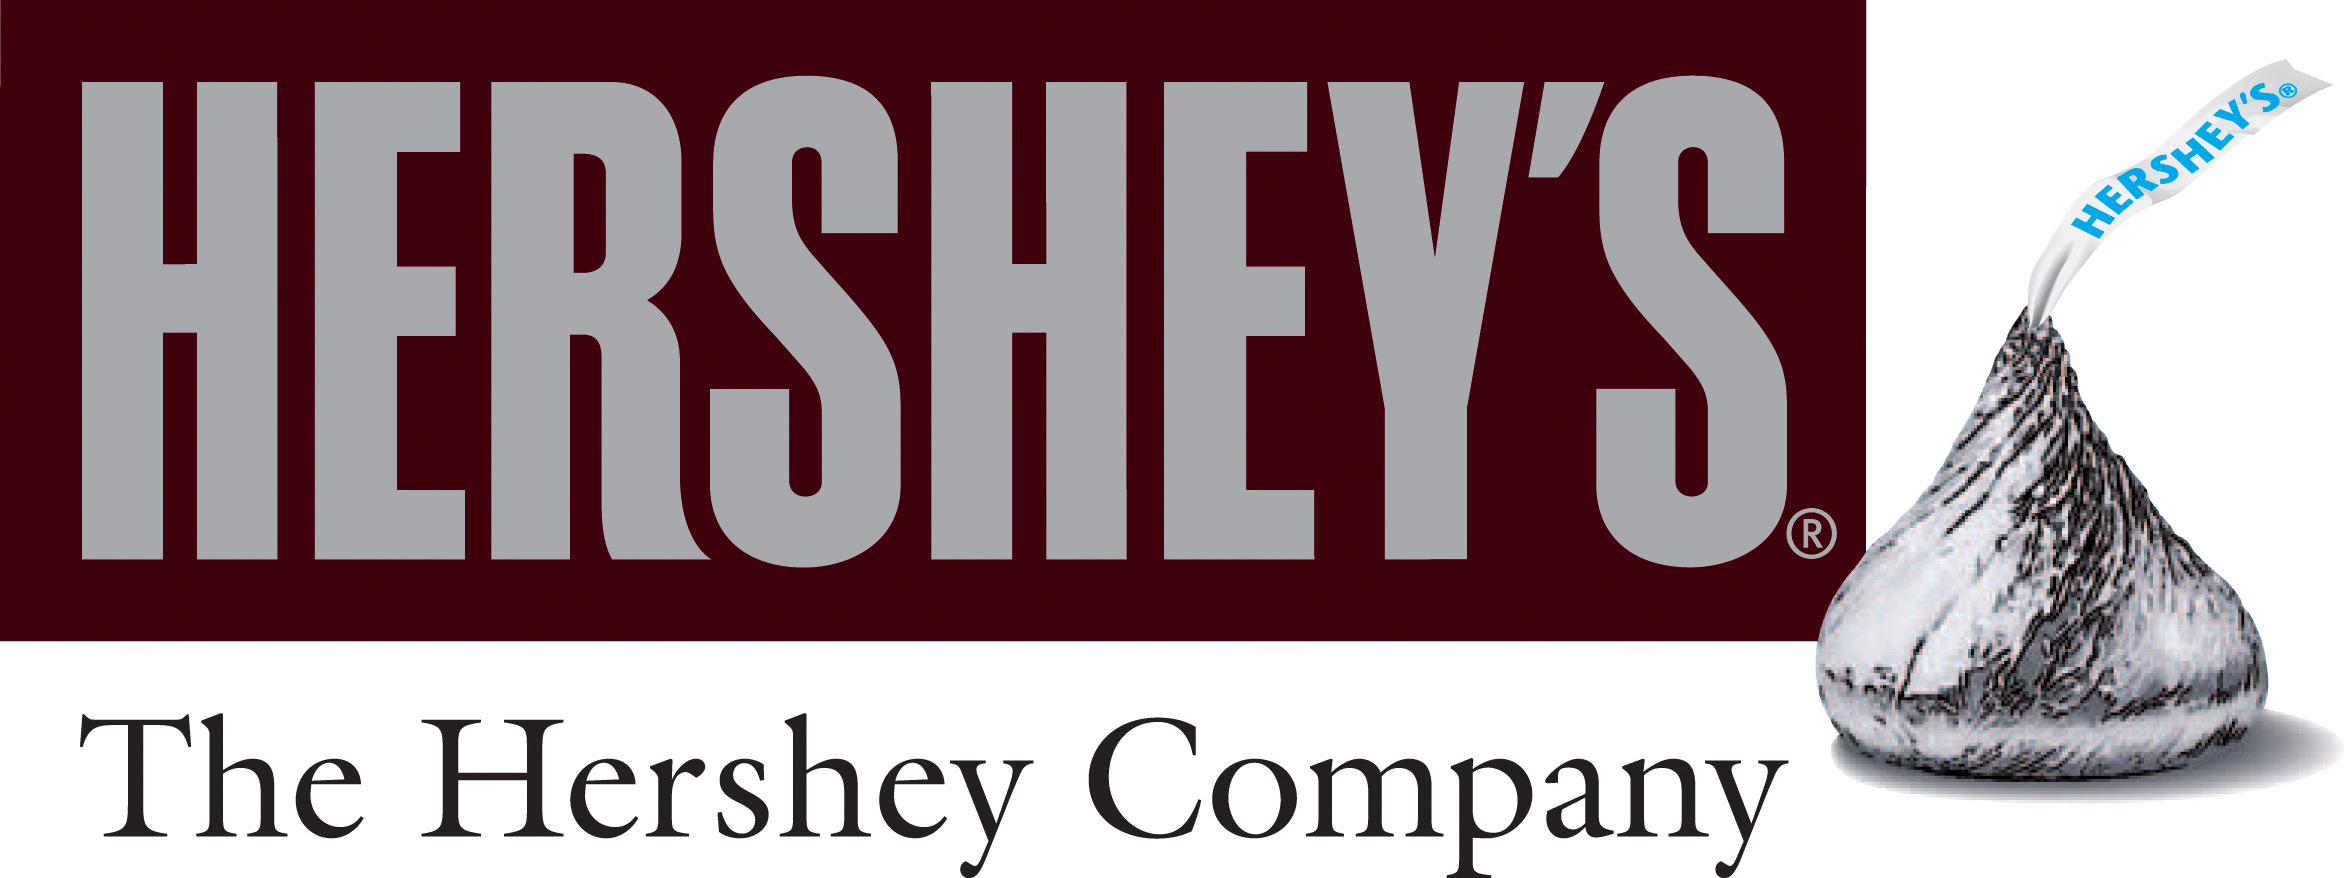 Palmyra native rebrands Hershey area business